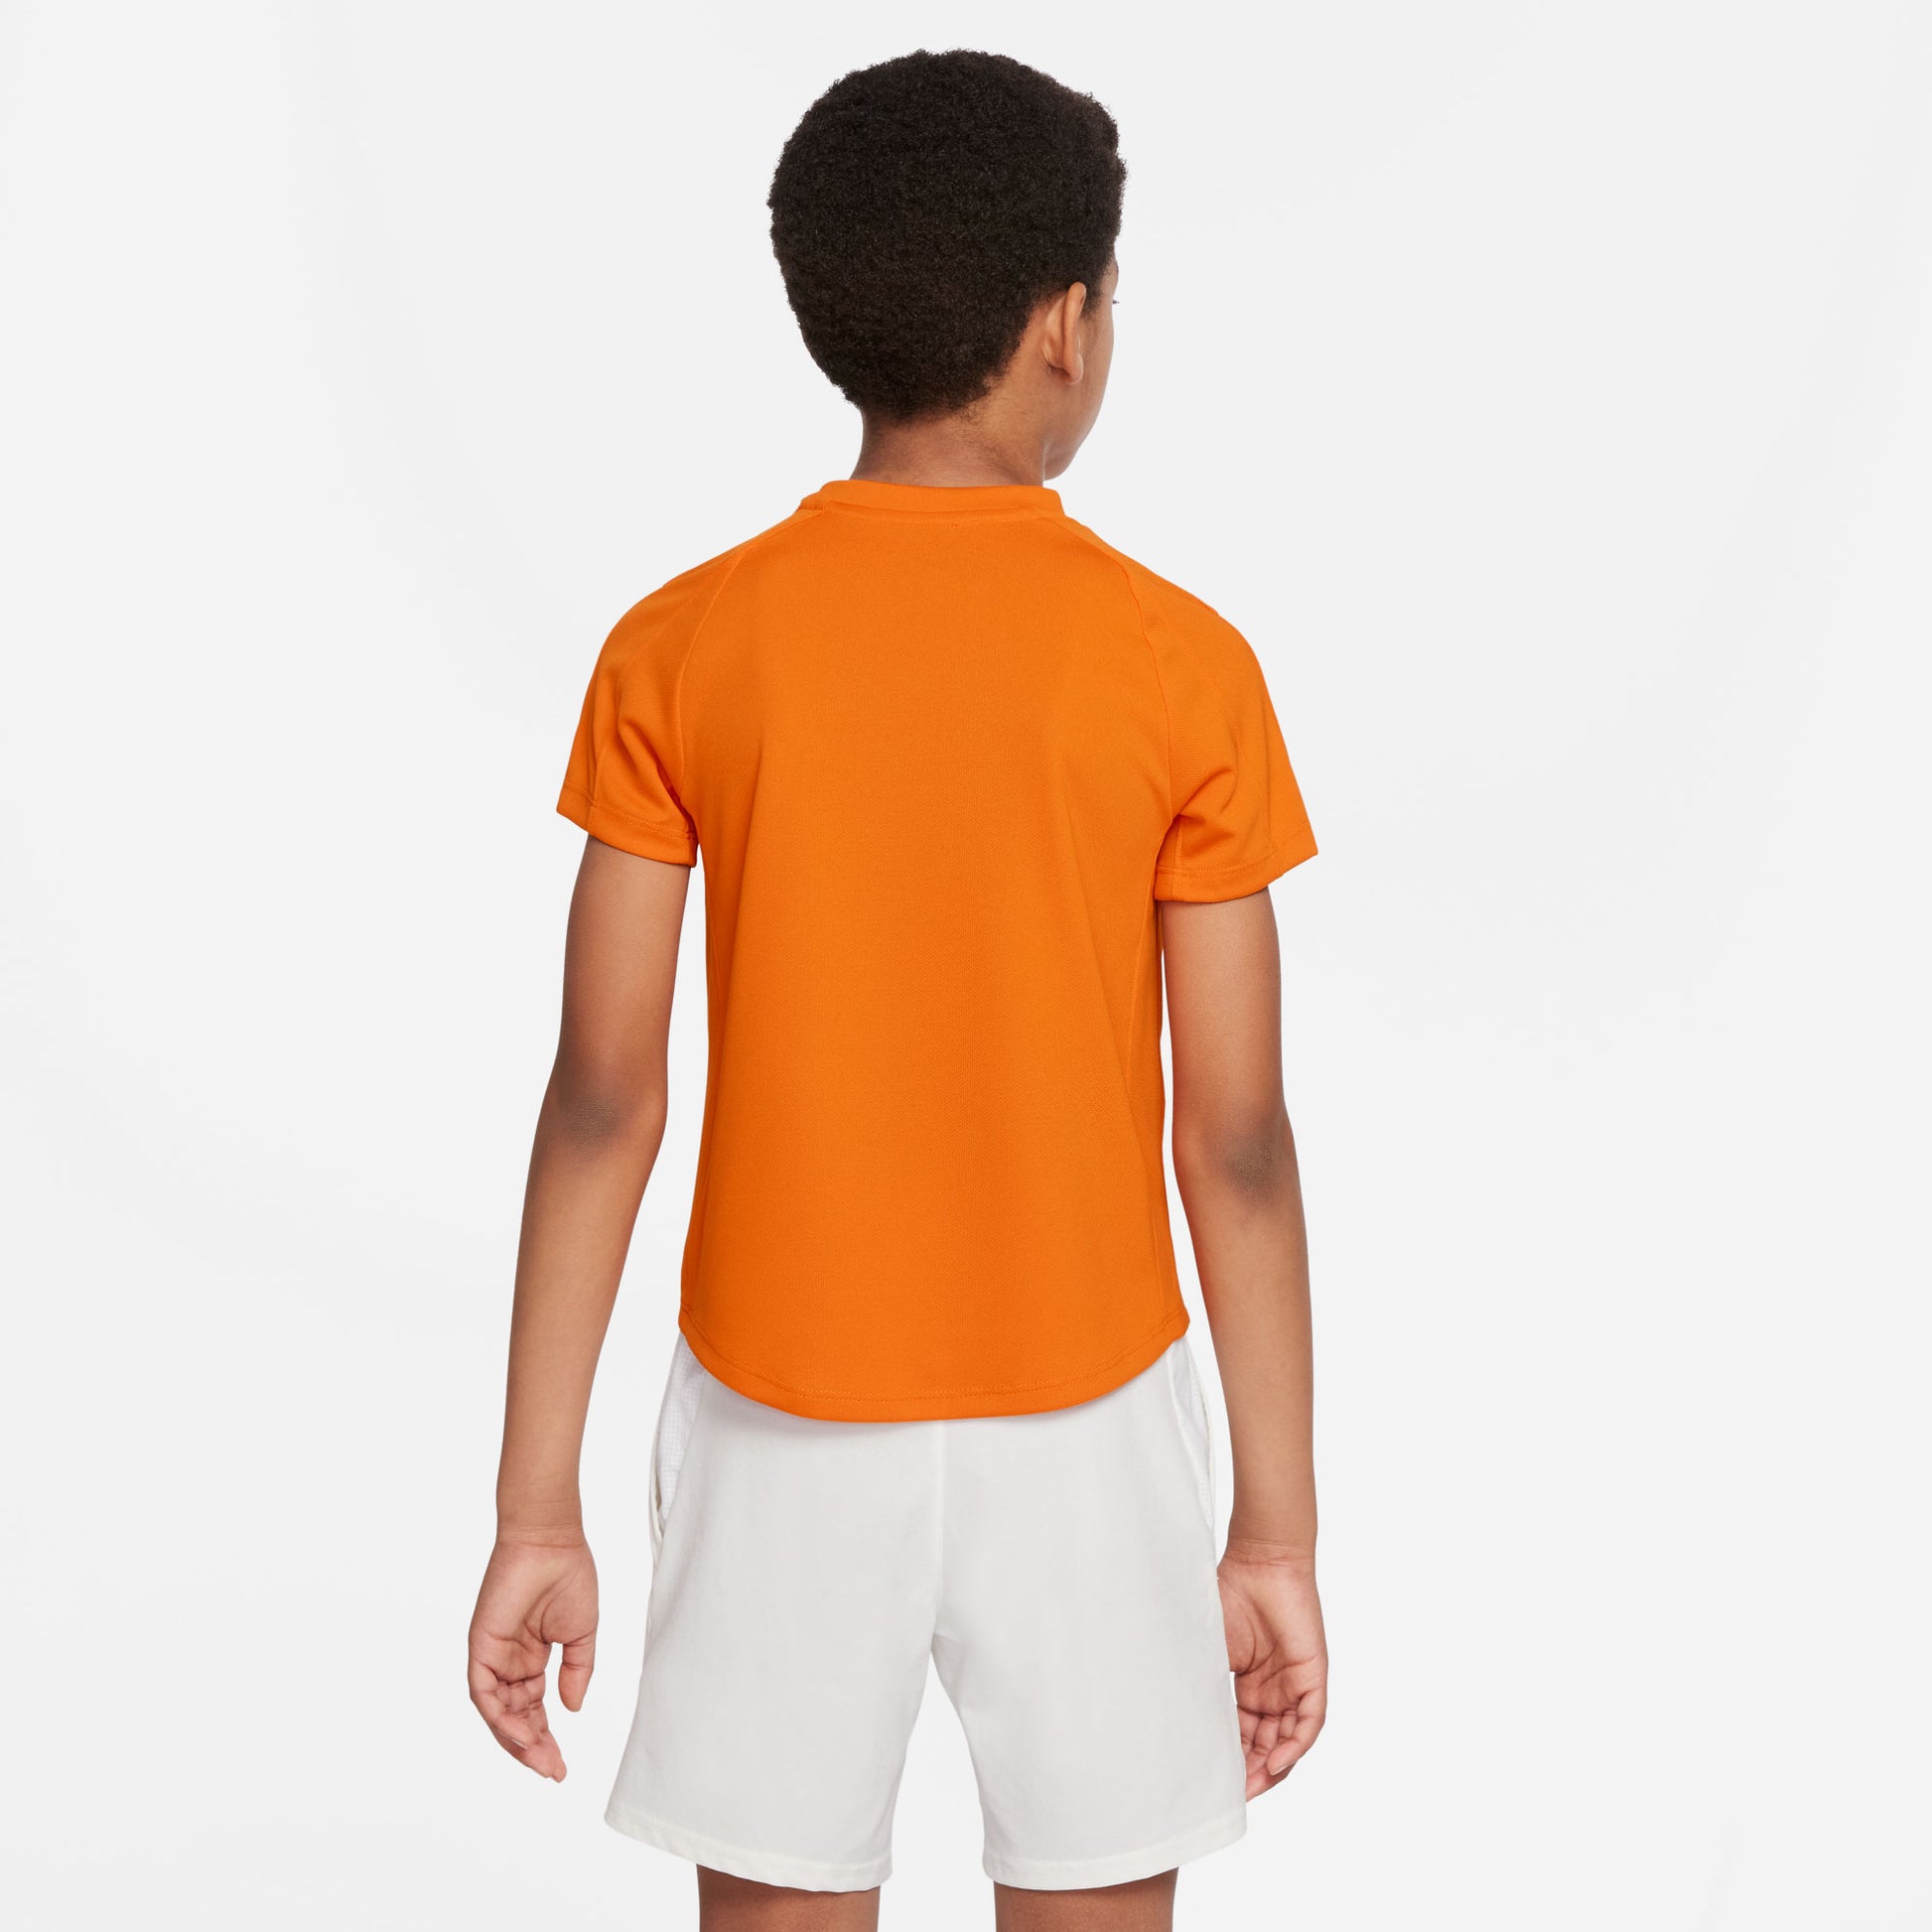 Nike NikeCourt Dri-Fit Victory Boys' Tennis Shirt Orange (2)